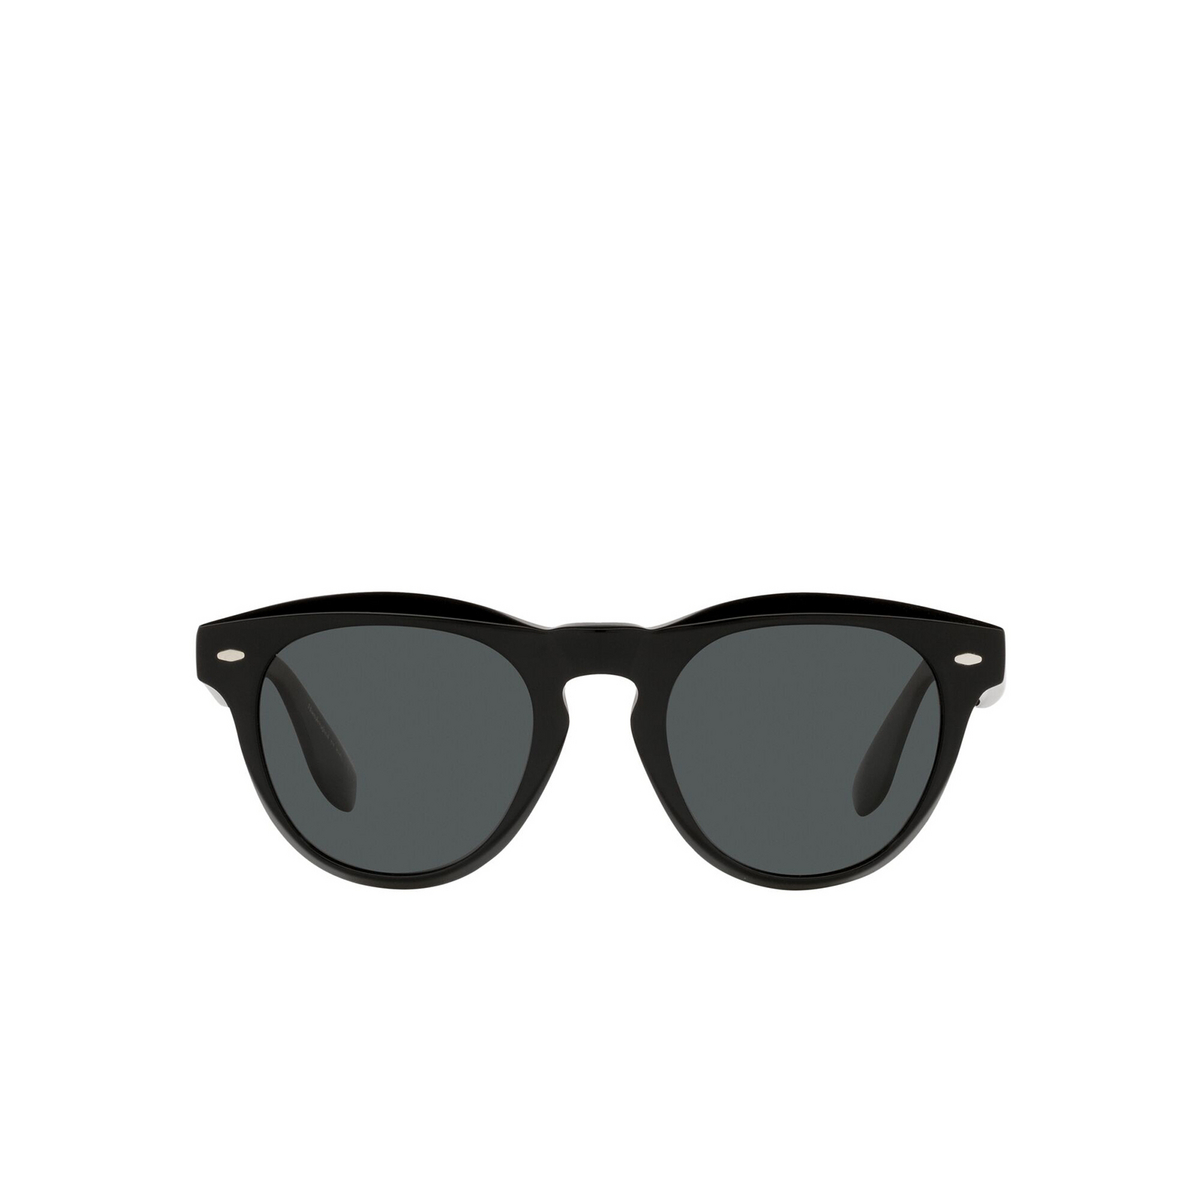 Oliver Peoples® Square Sunglasses: Nino OV5473SU color Black 1005P2 - front view.